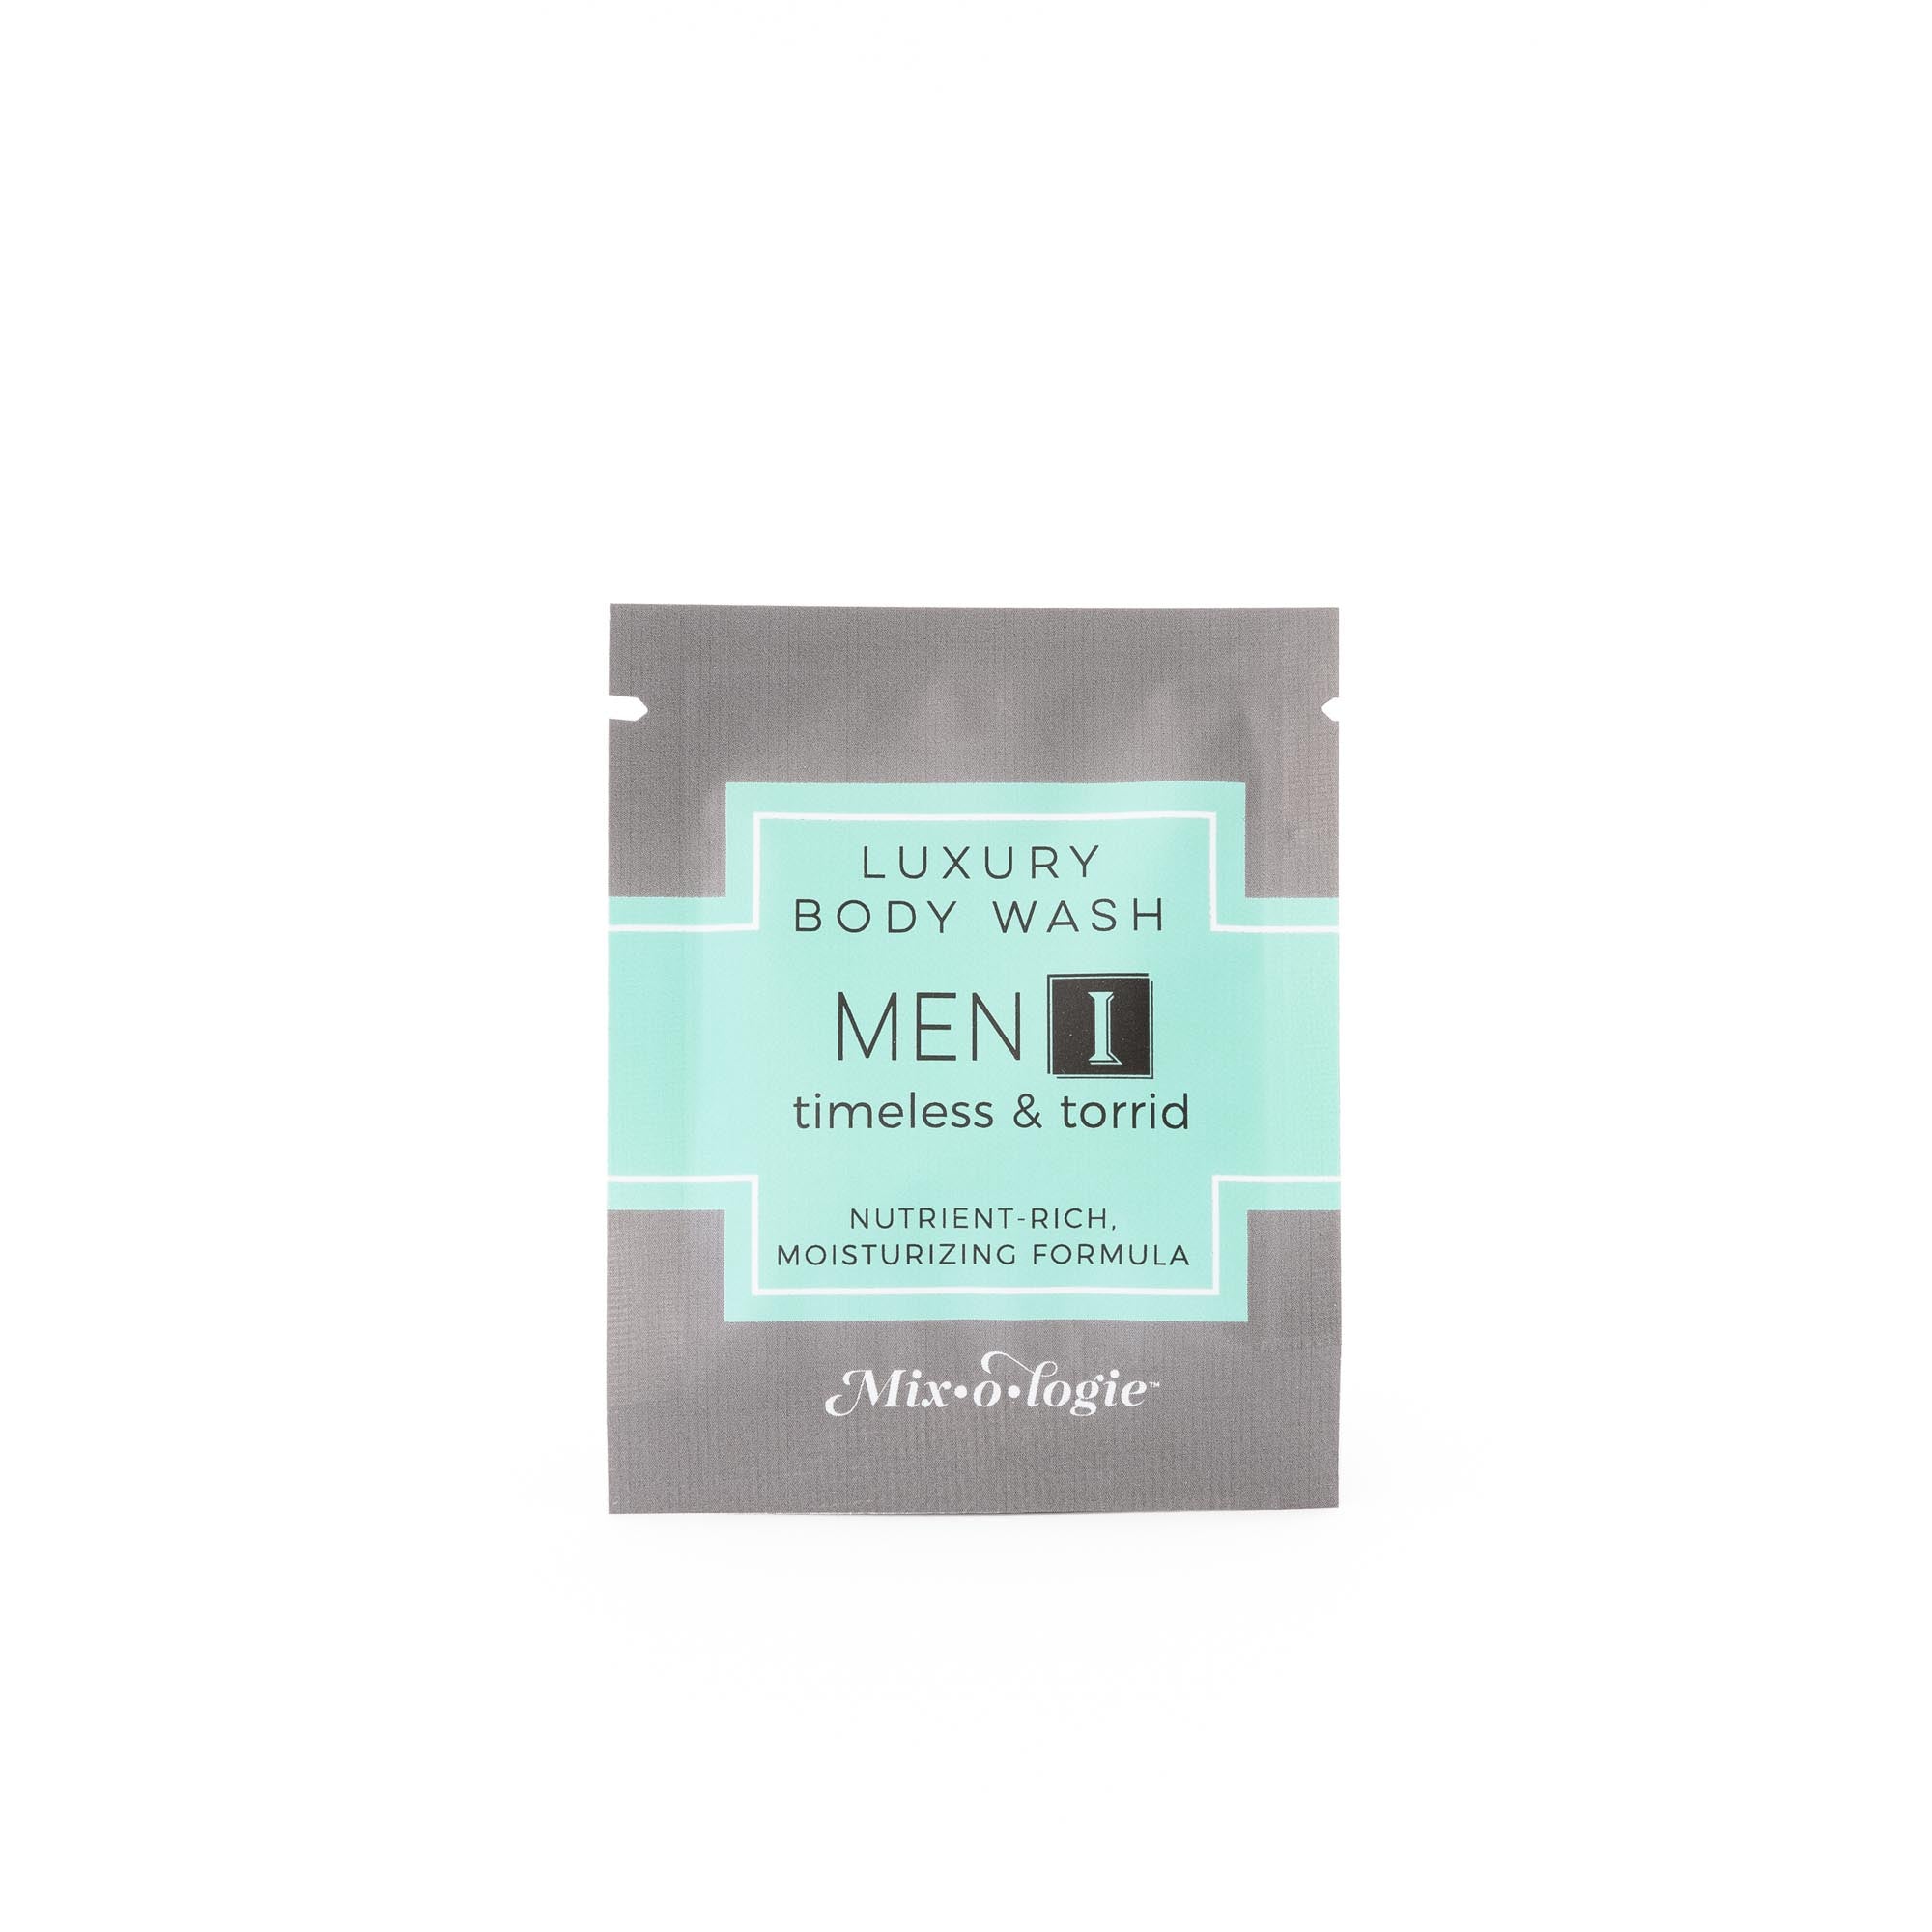 Men's Body Wash Sample Pack of 100